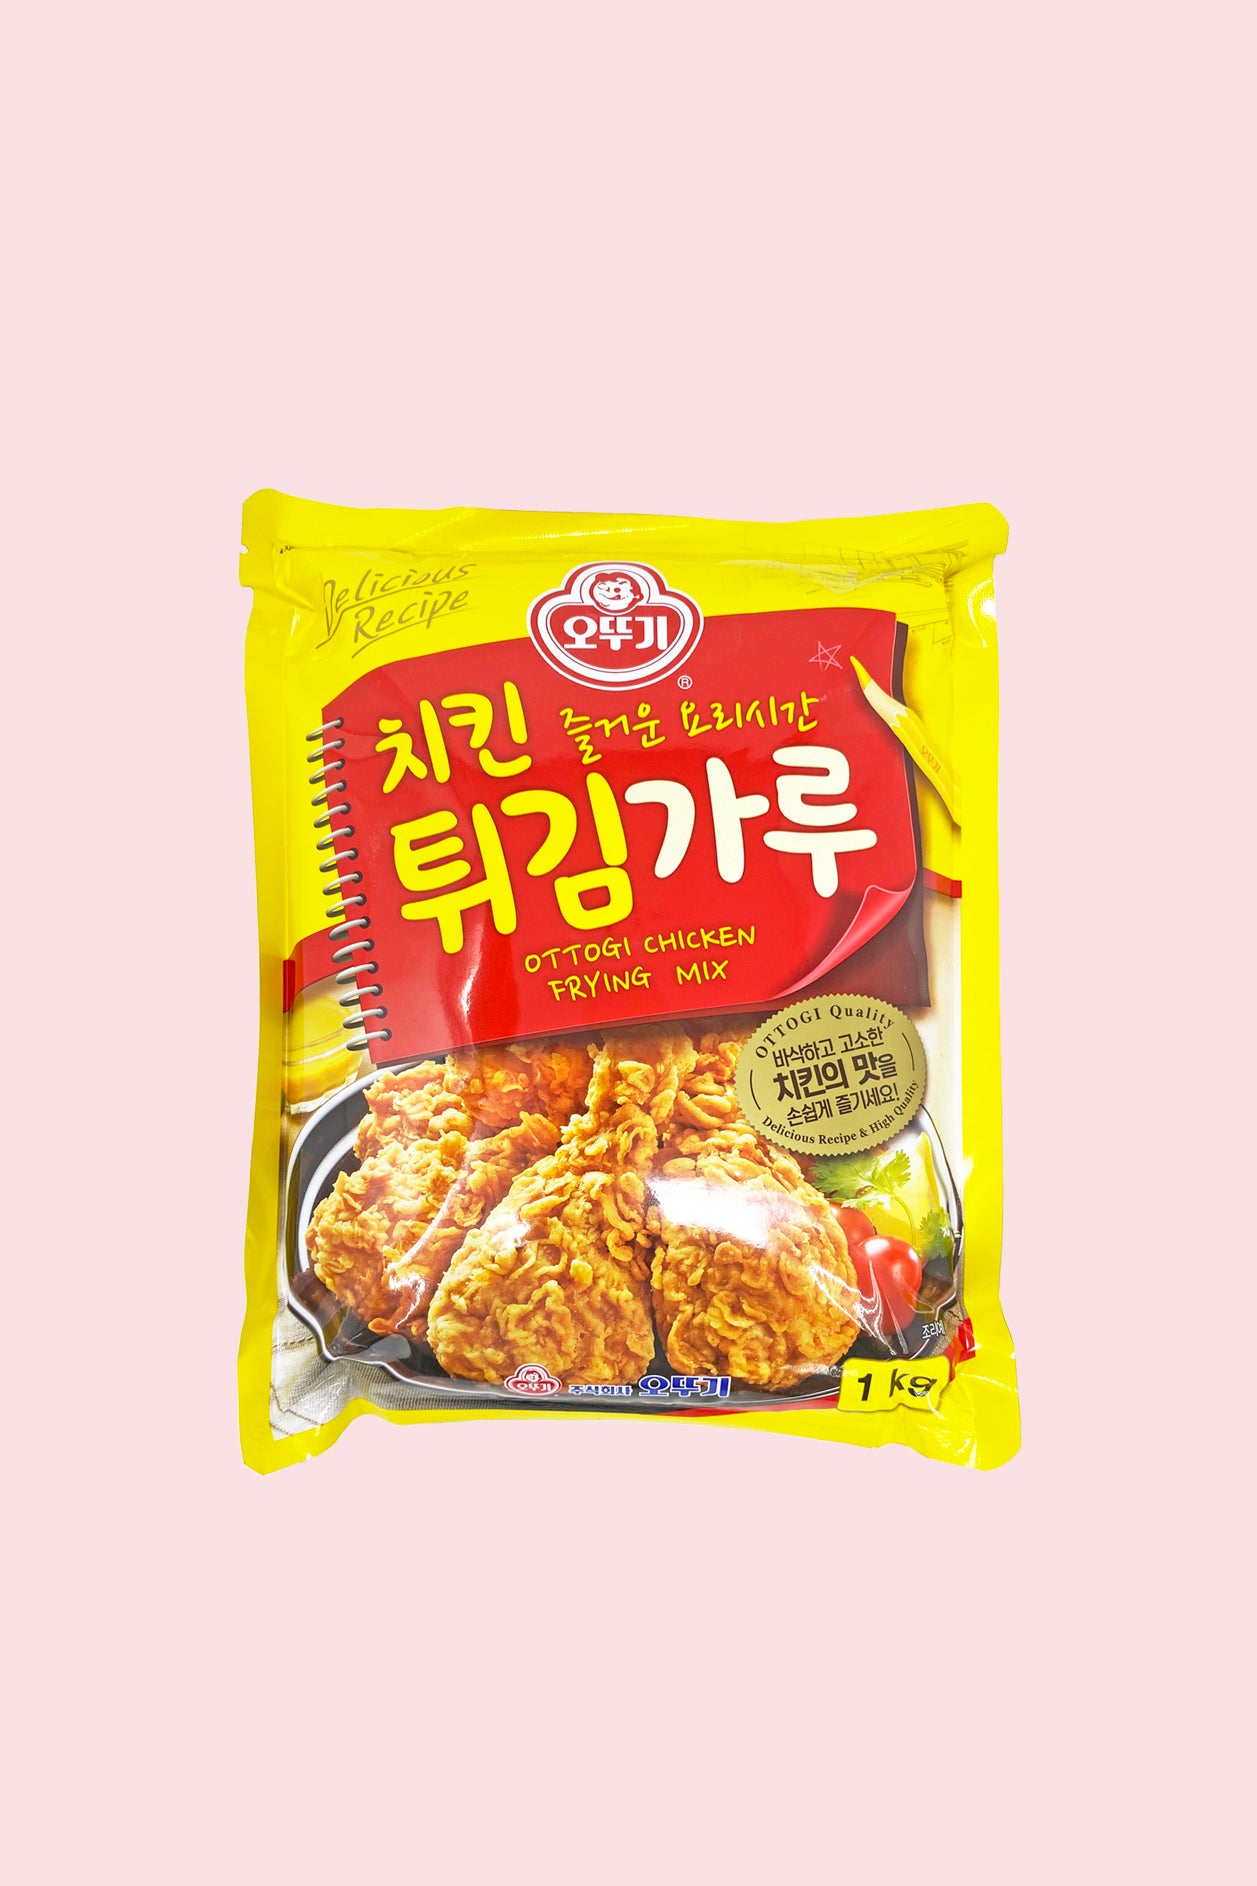 Ottogi Crispy Fried Chicken Mix 1Kg - NikanKitchen (日韓台所)